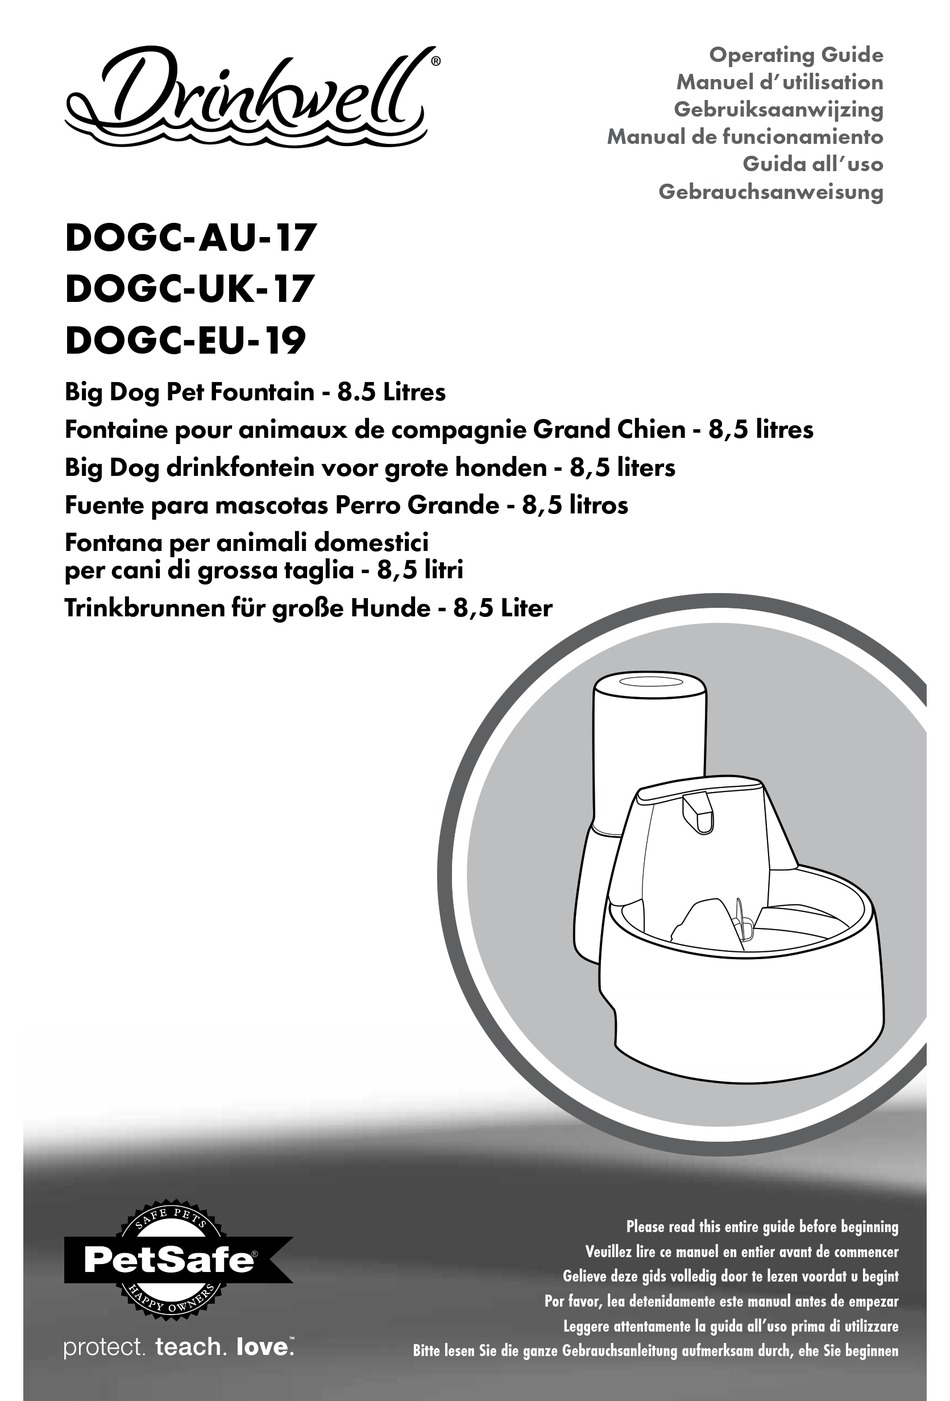 petsafe-drinkwell-dogc-au-17-operating-manual-pdf-download-manualslib